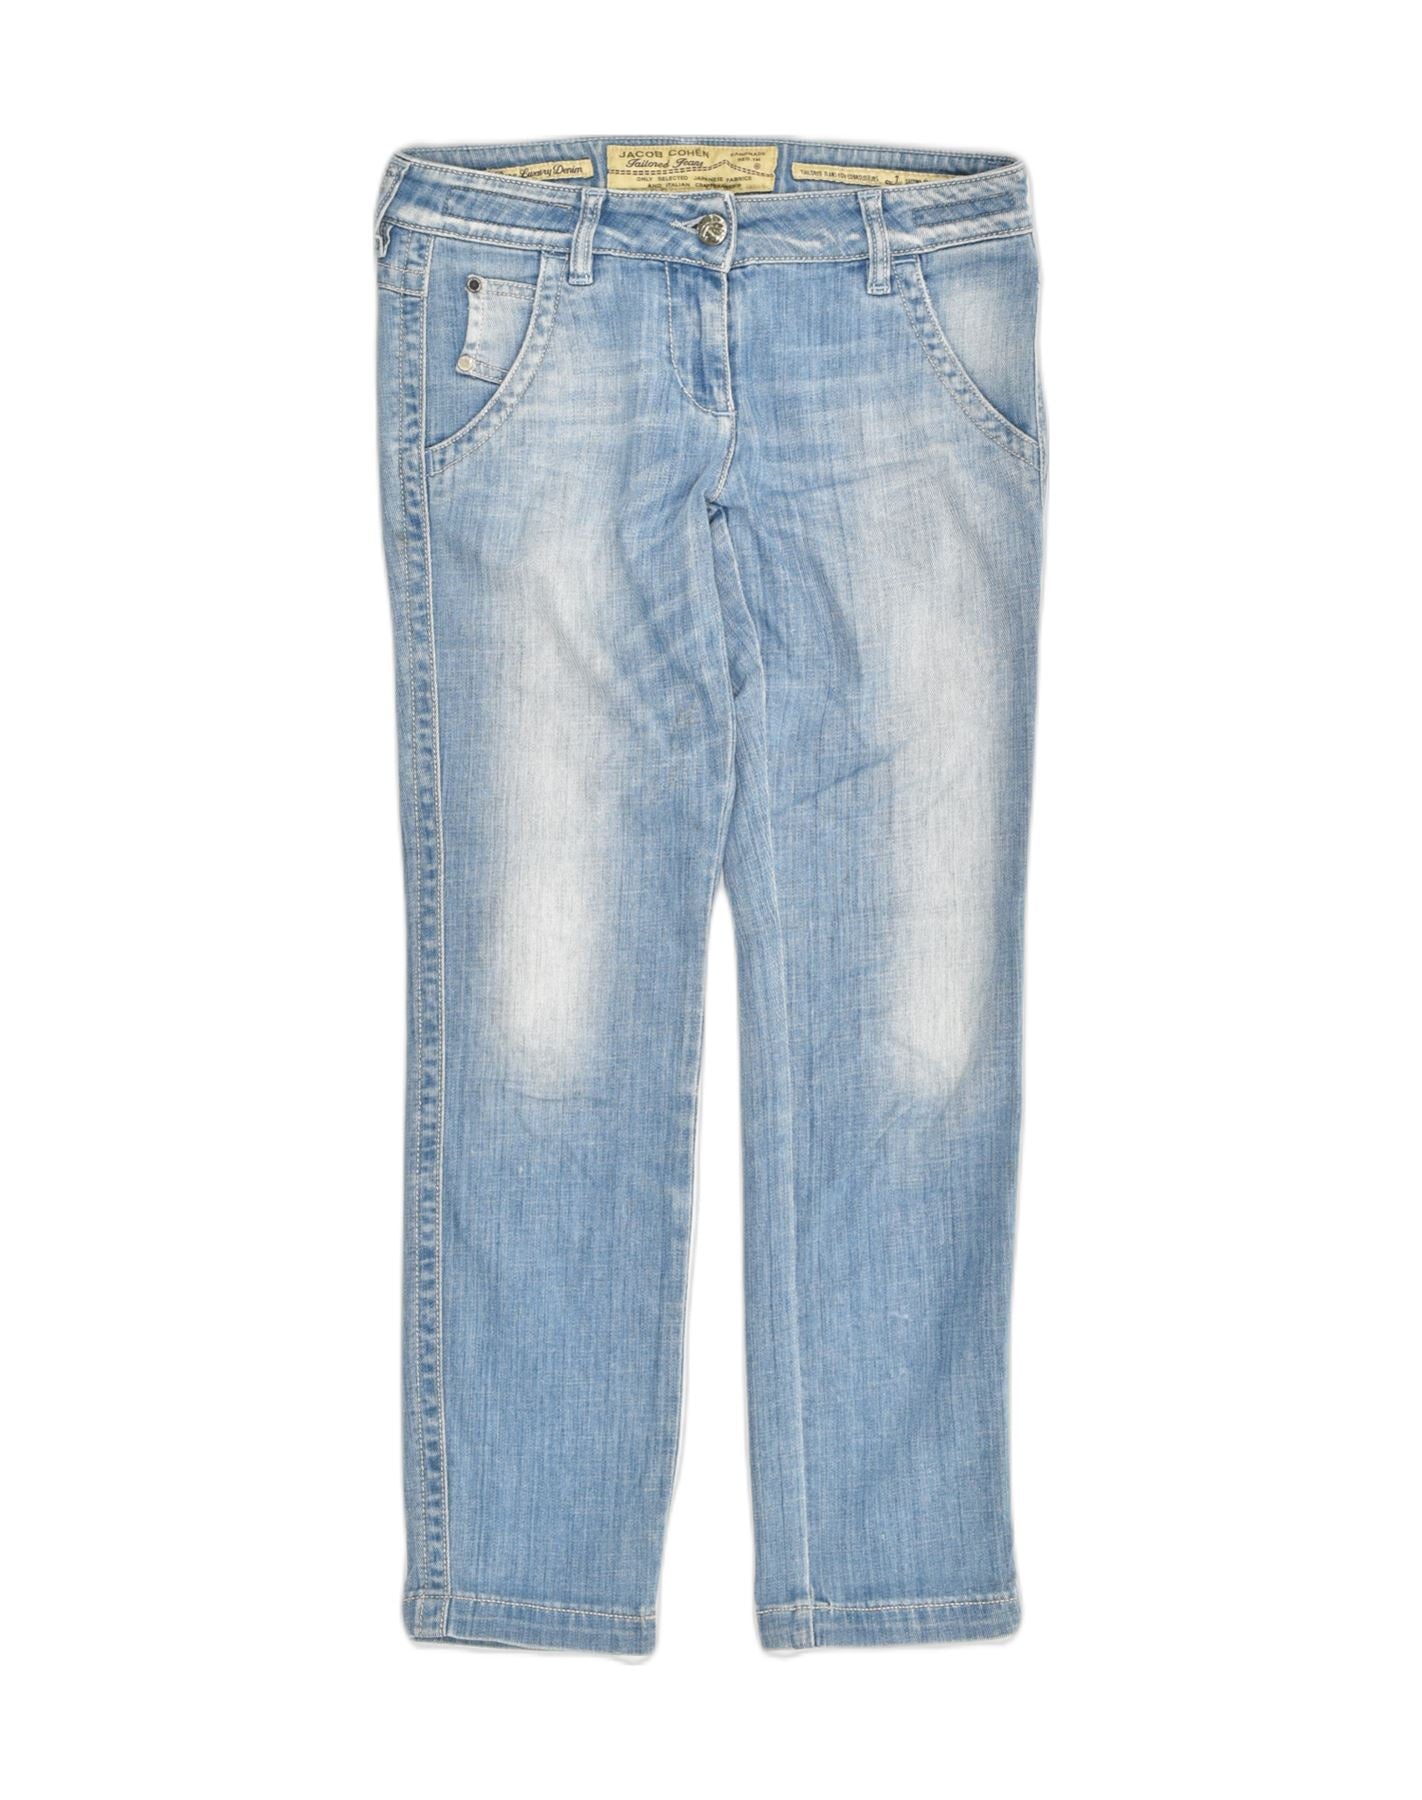 HOLLISTER Womens Super Skinny Jeans W28 L33 Blue Cotton